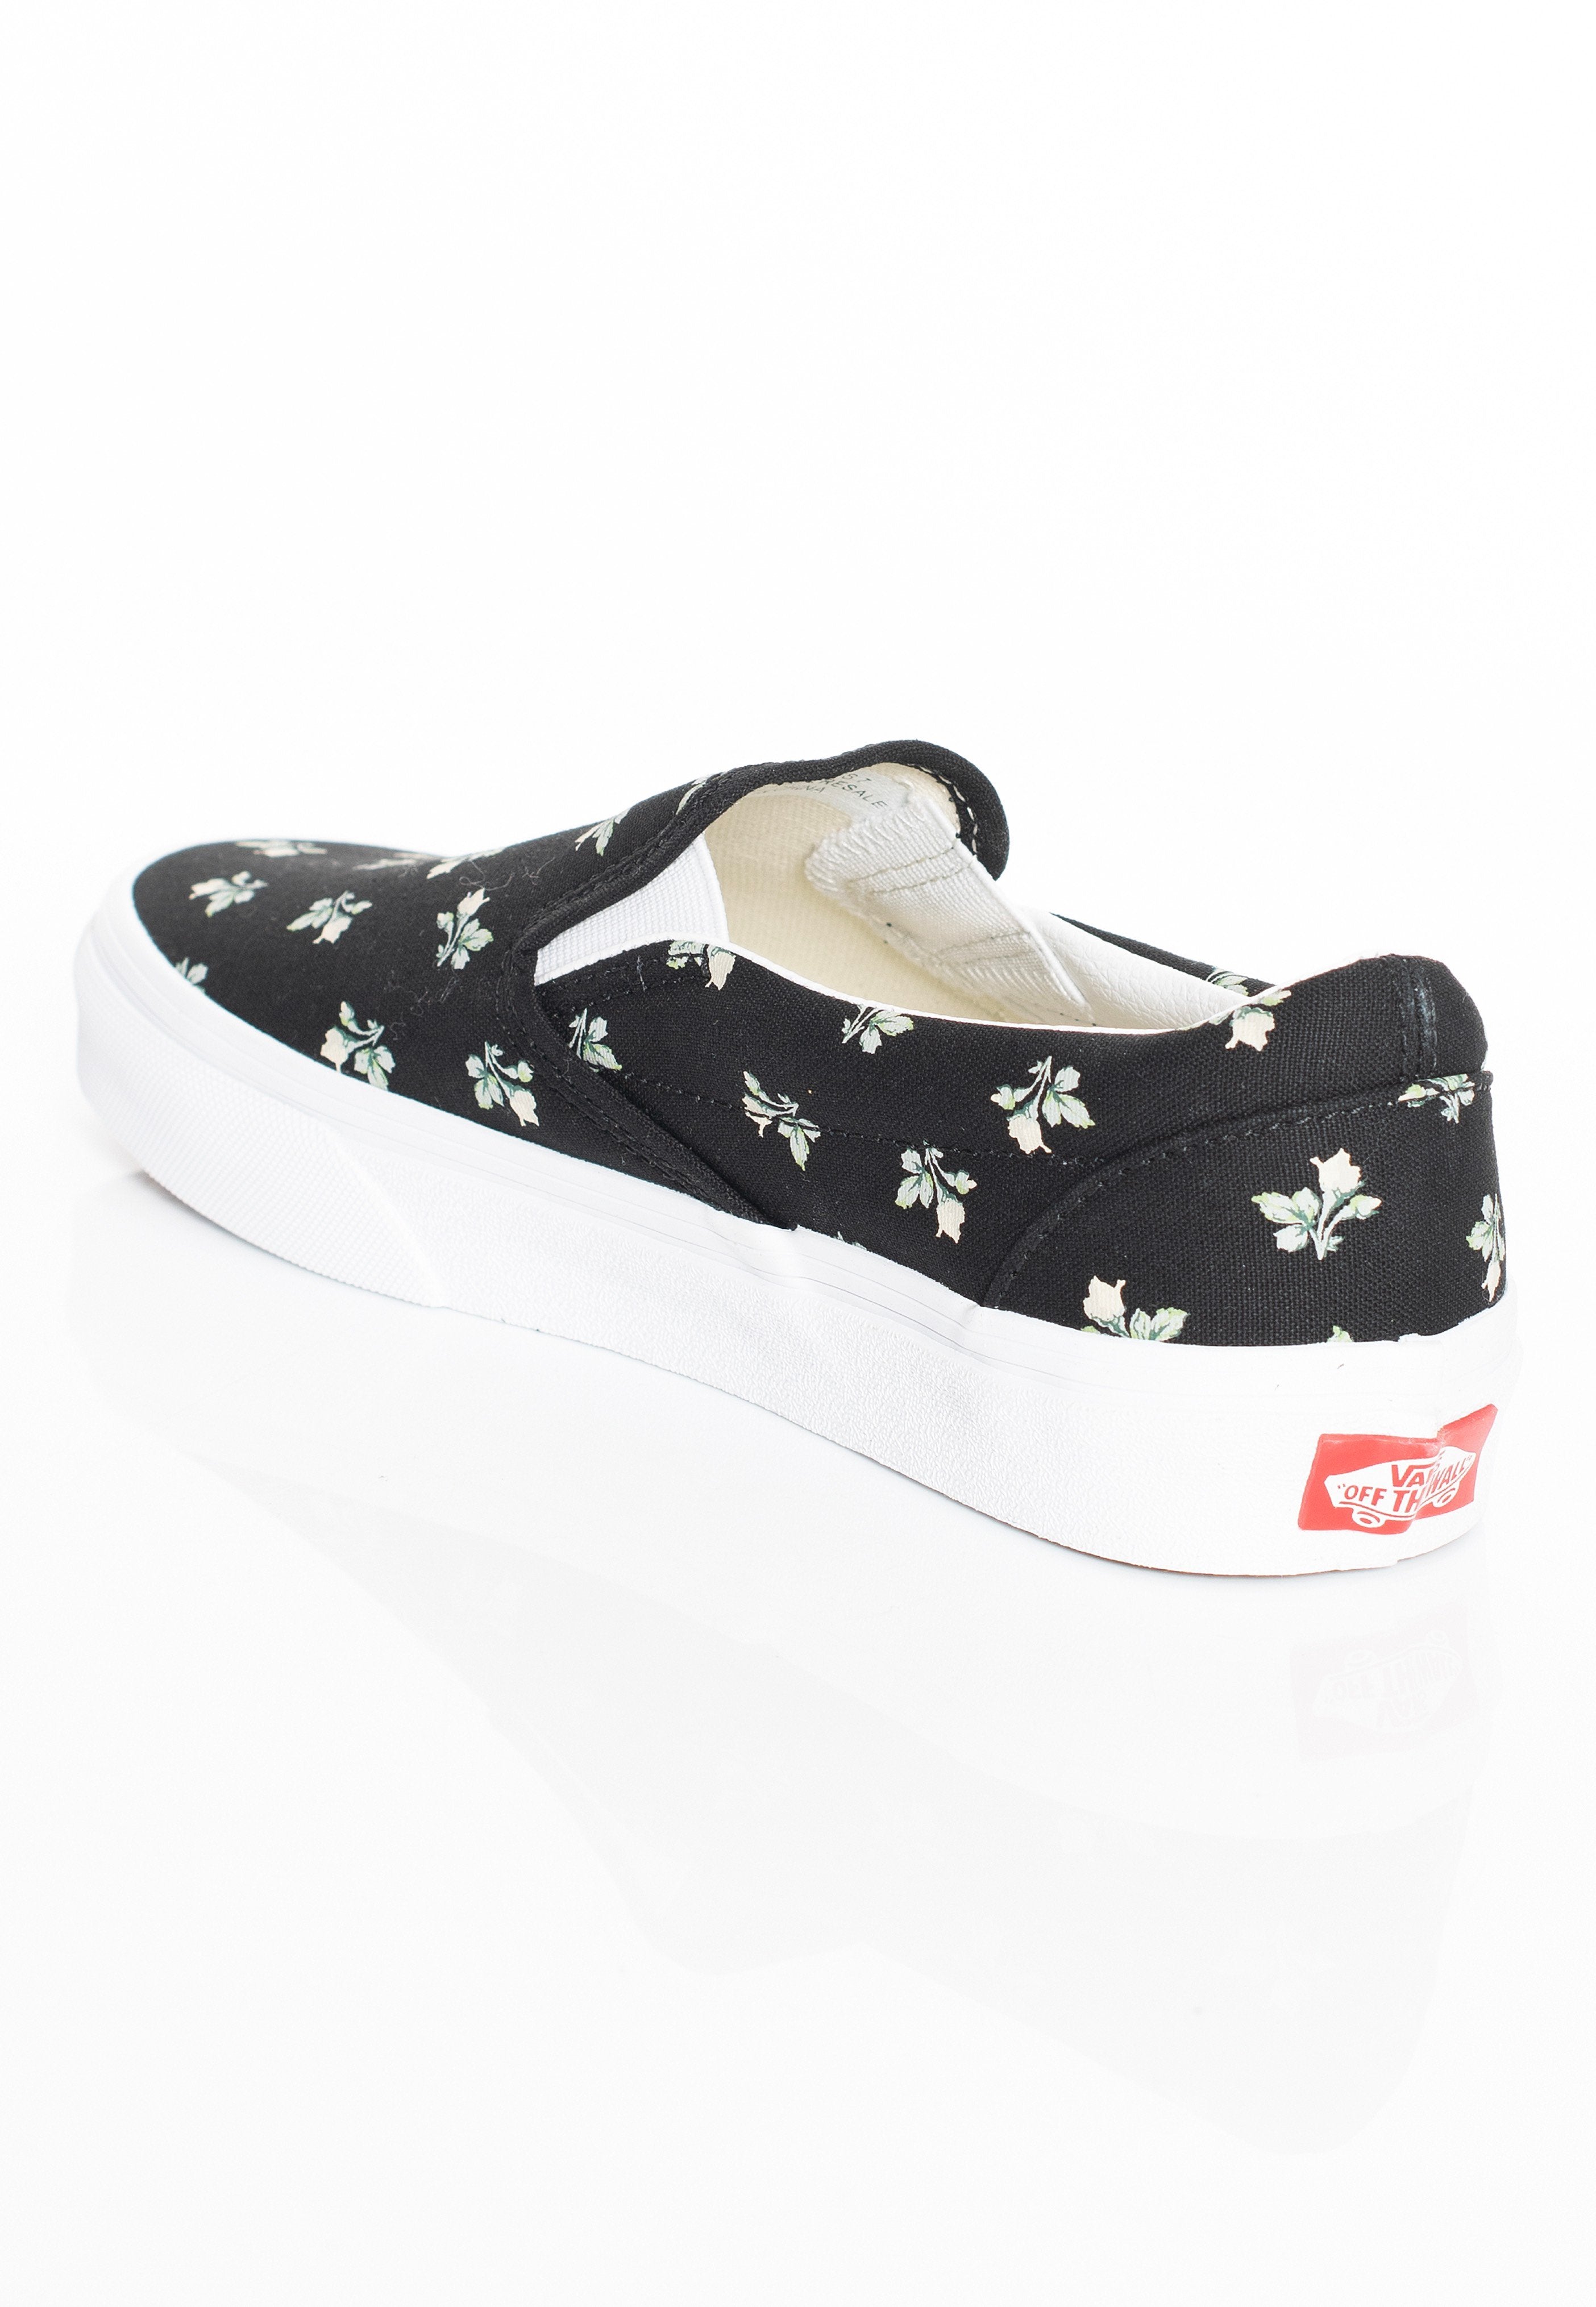 Vans - Classic Slip-On Floral Black - Girl Shoes